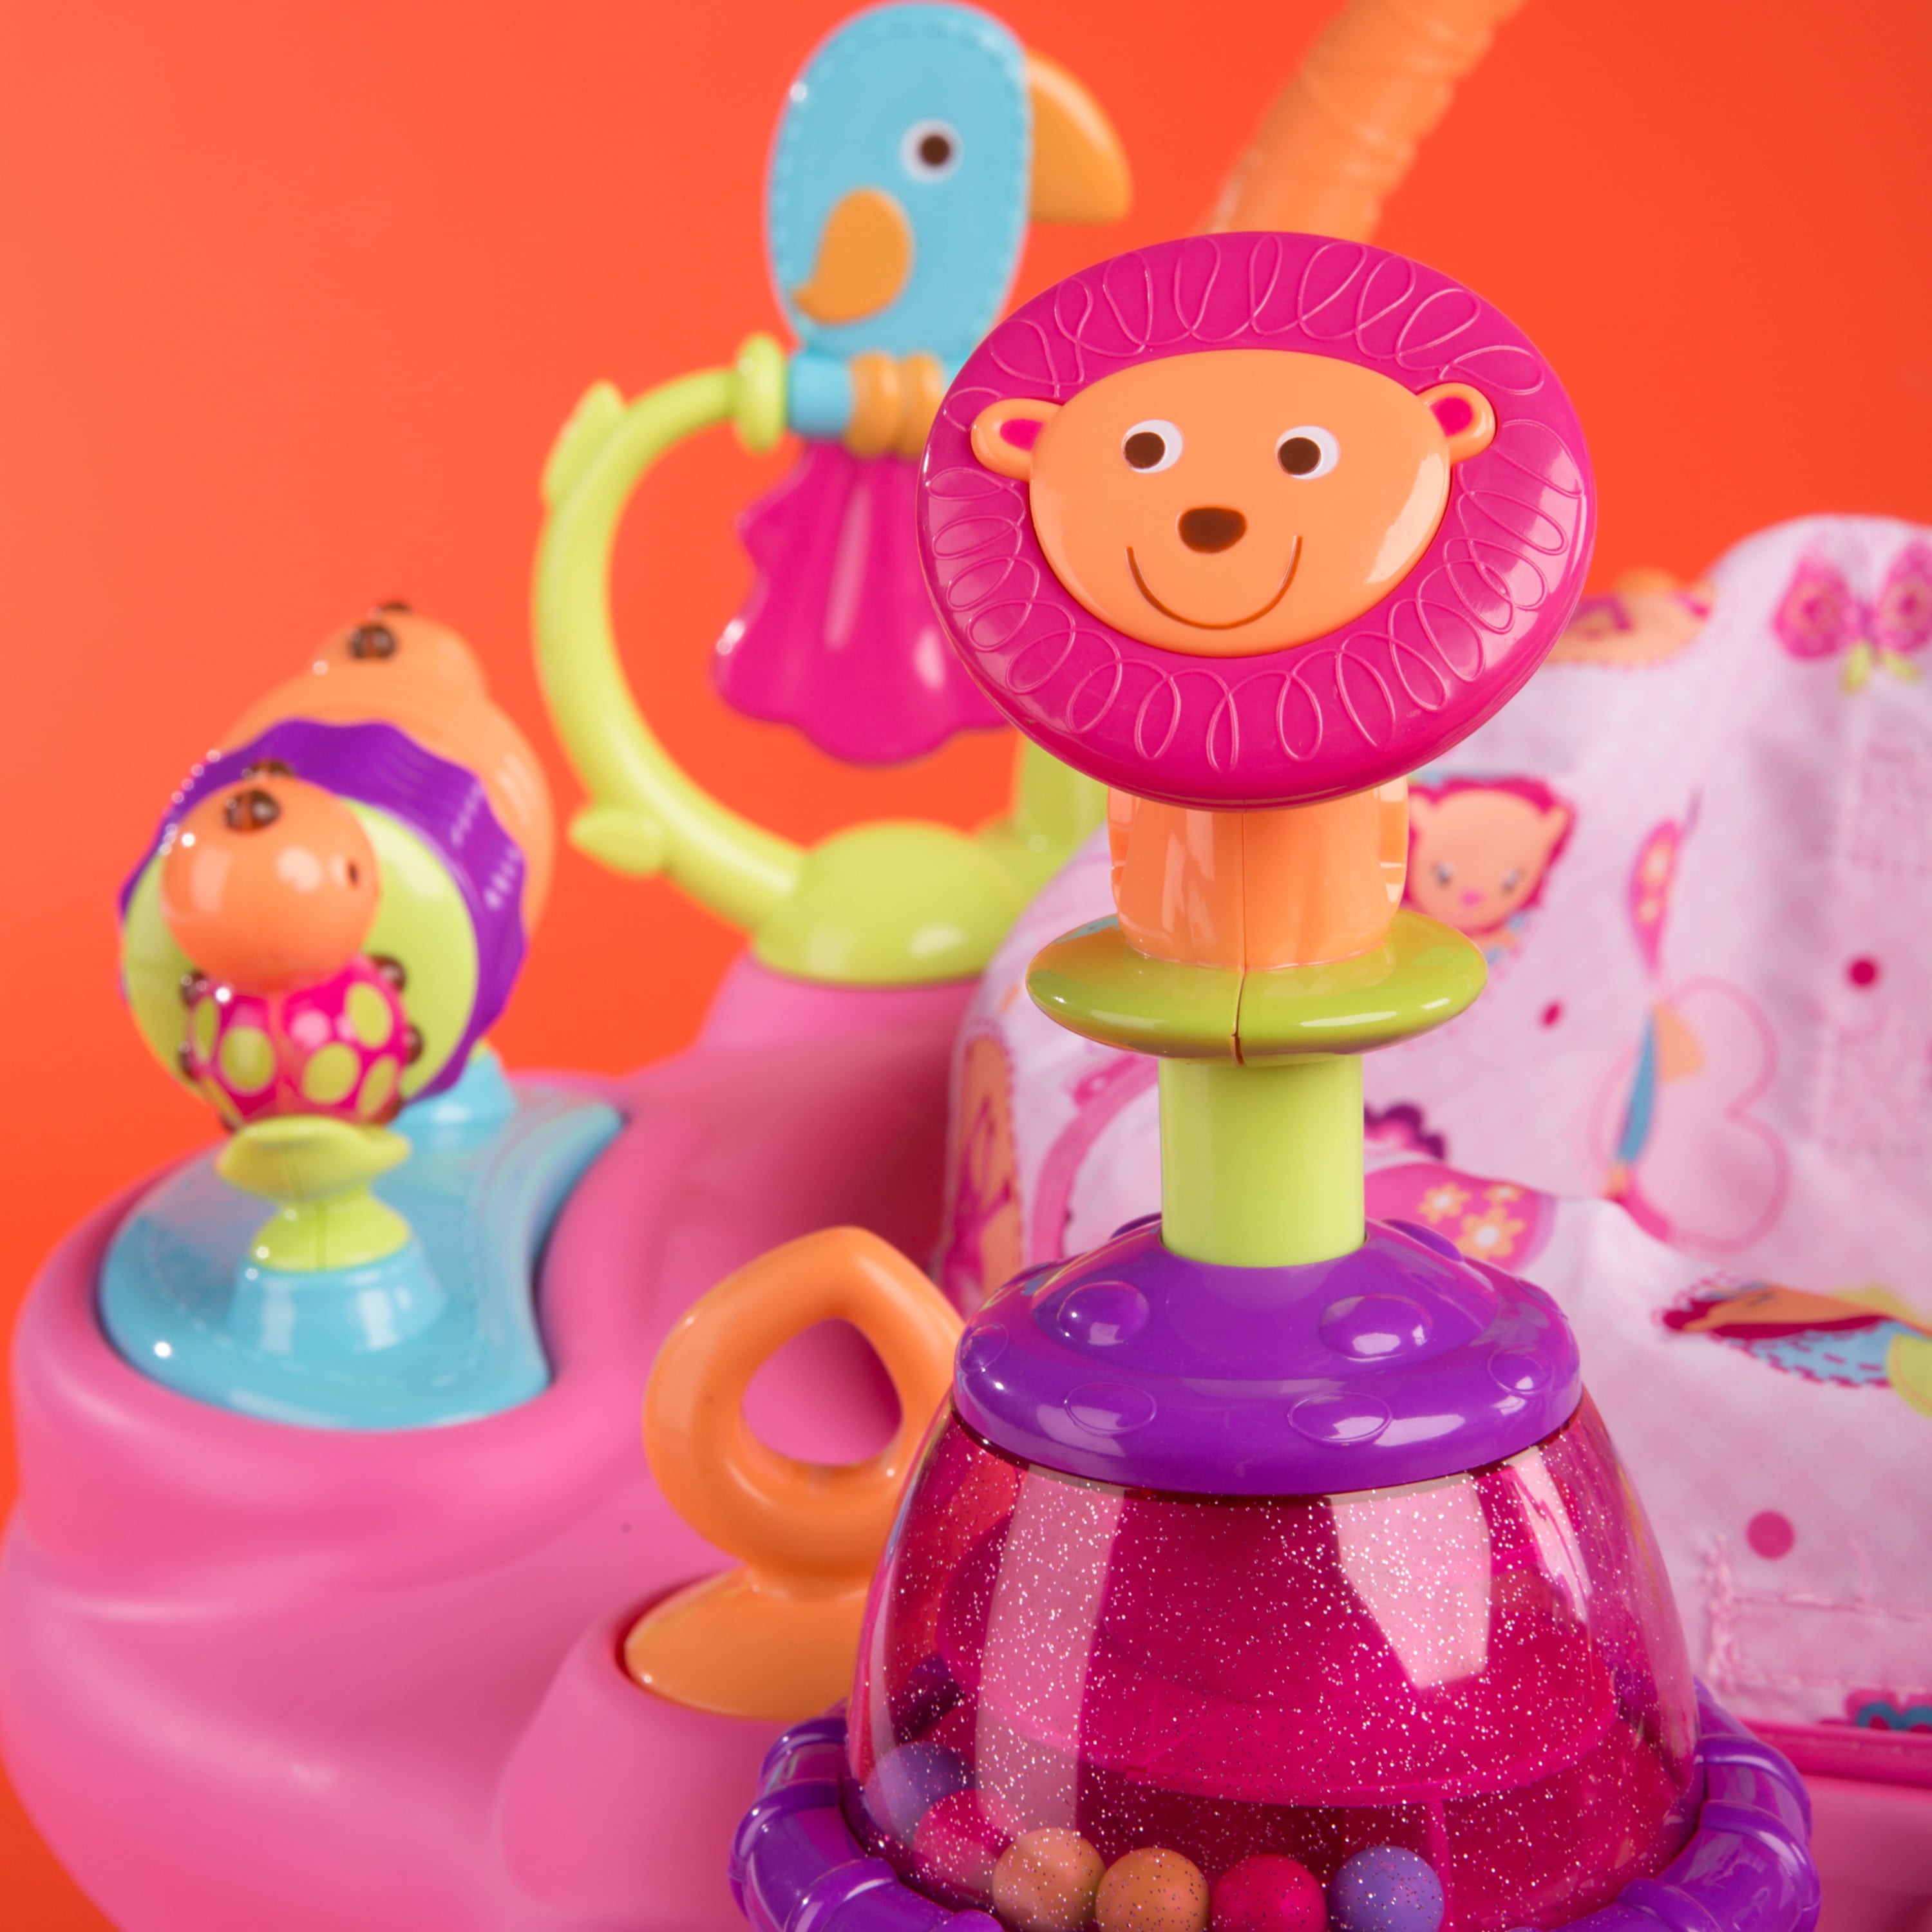 Safari Park Jr. — Bright Bean Toys